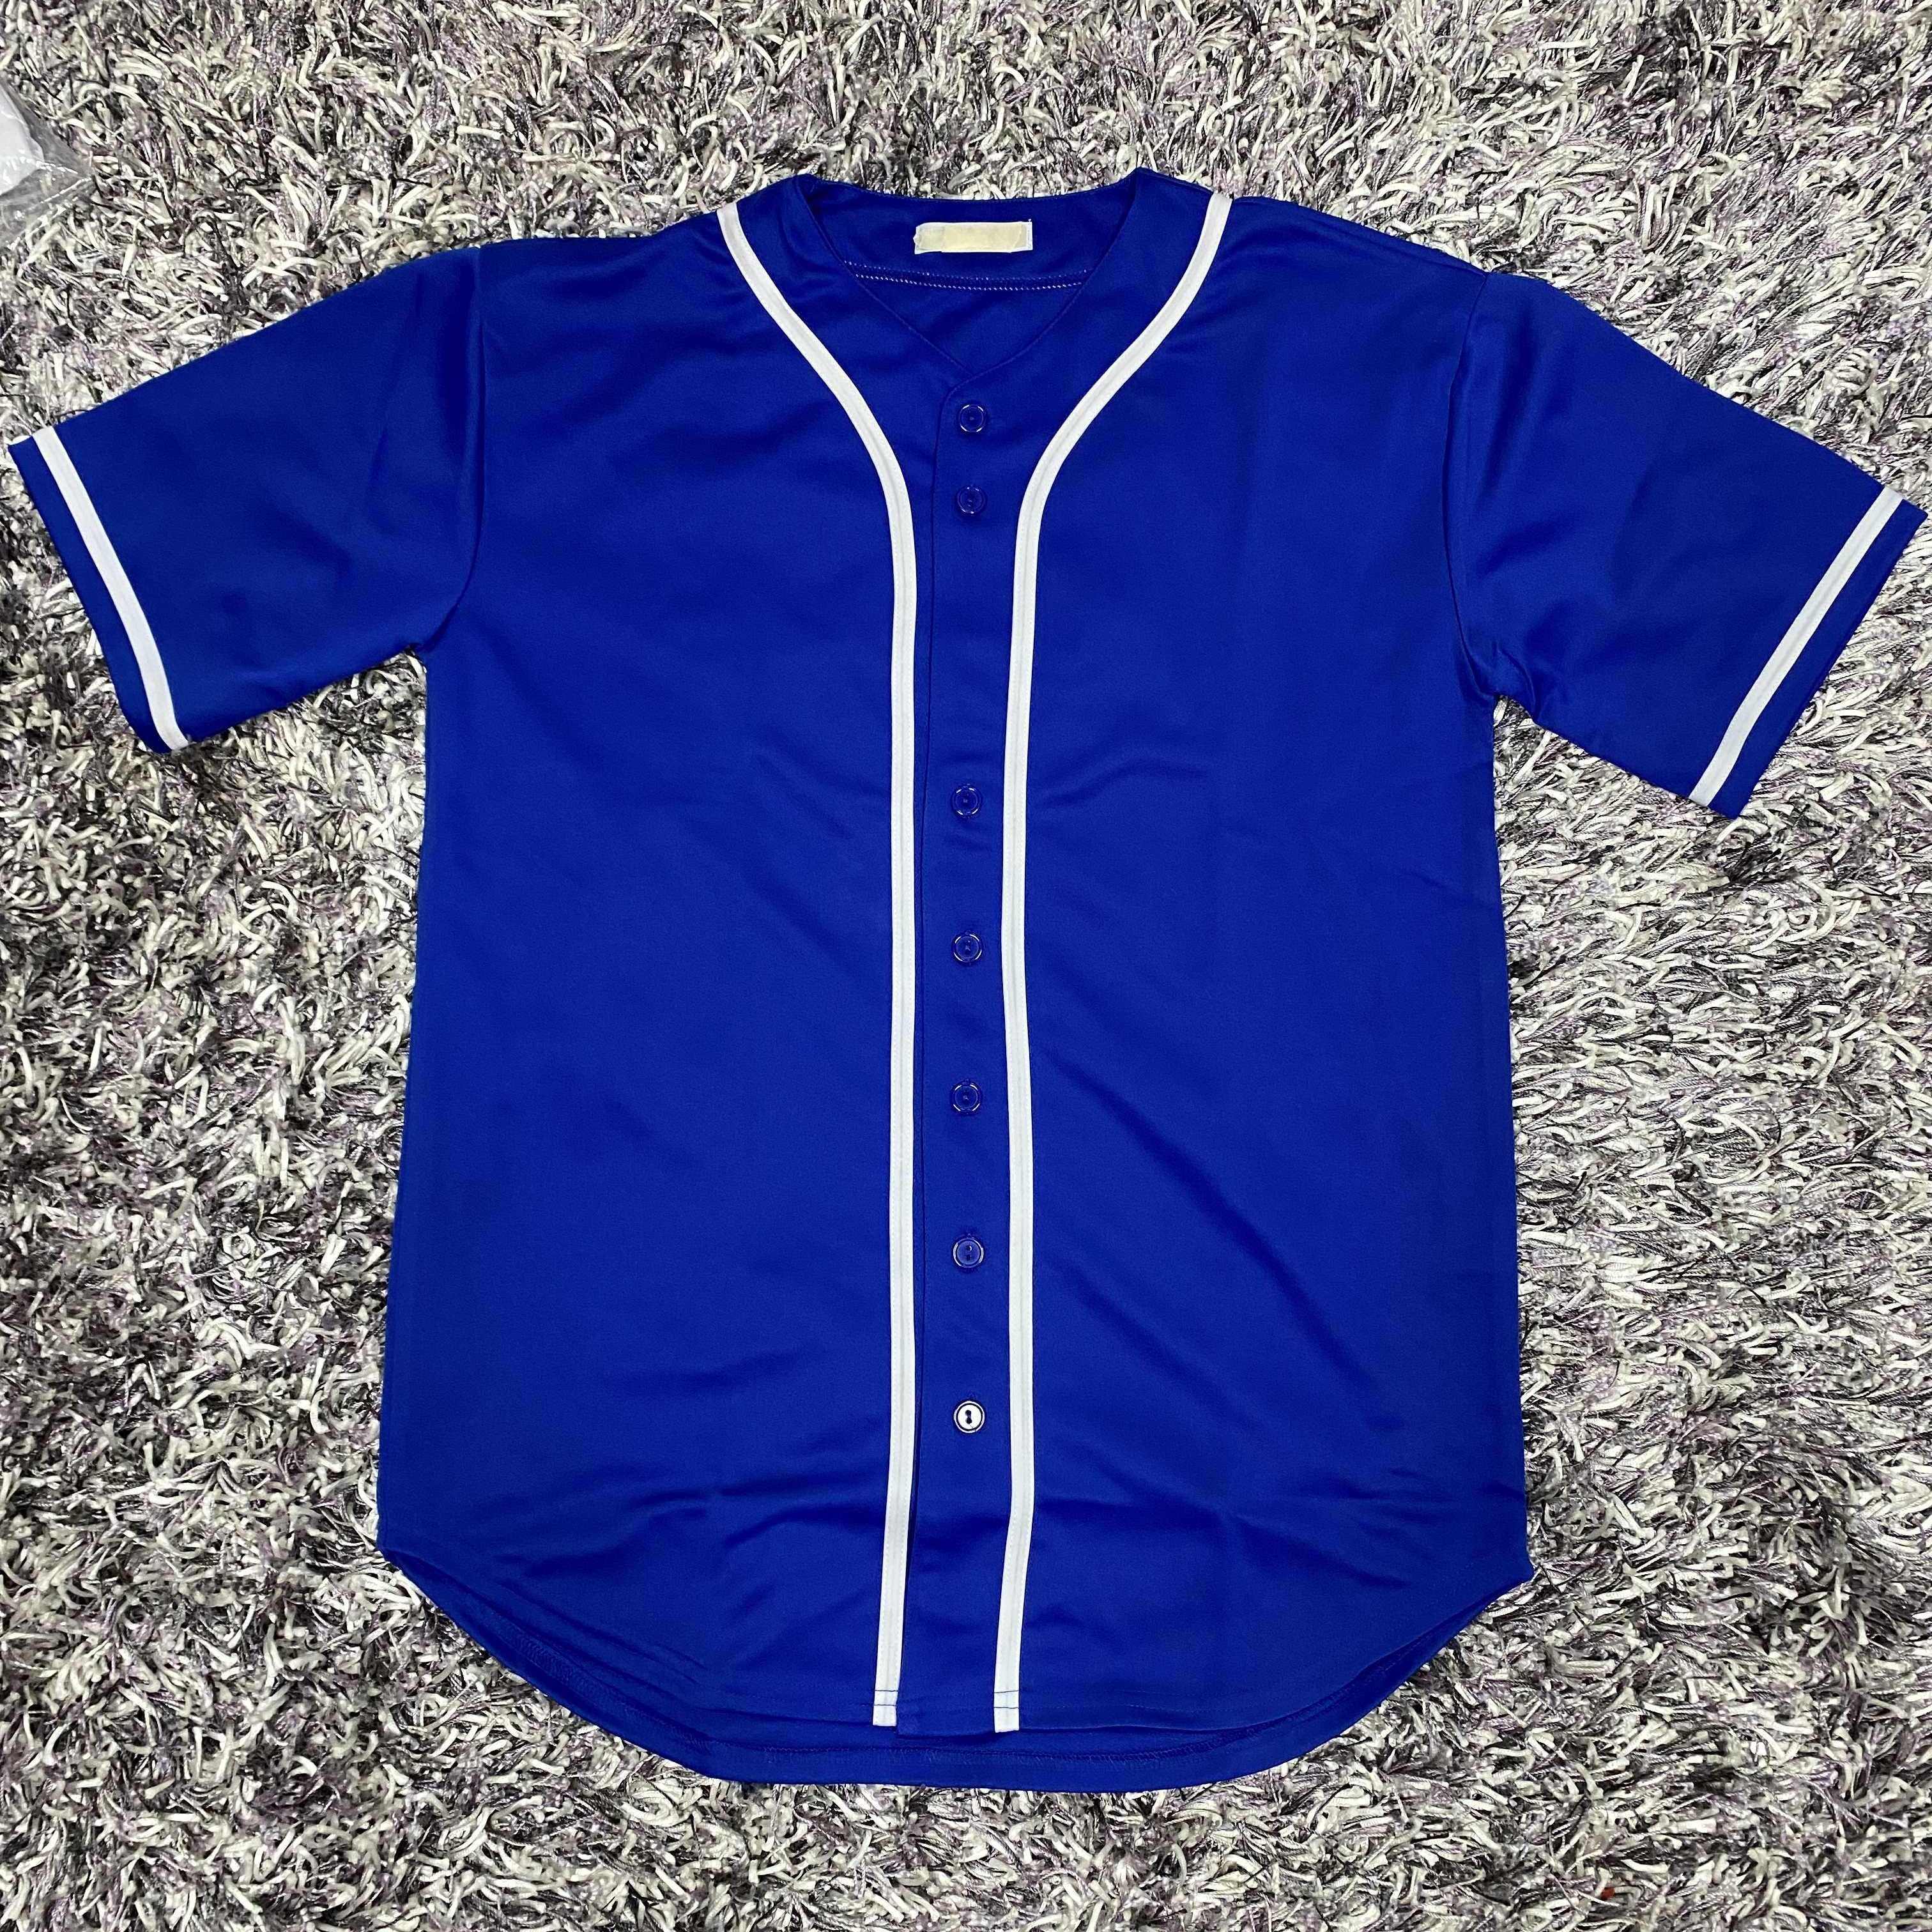 Men's Green Baseball Jersey, Retro Classic Baseball Shirt